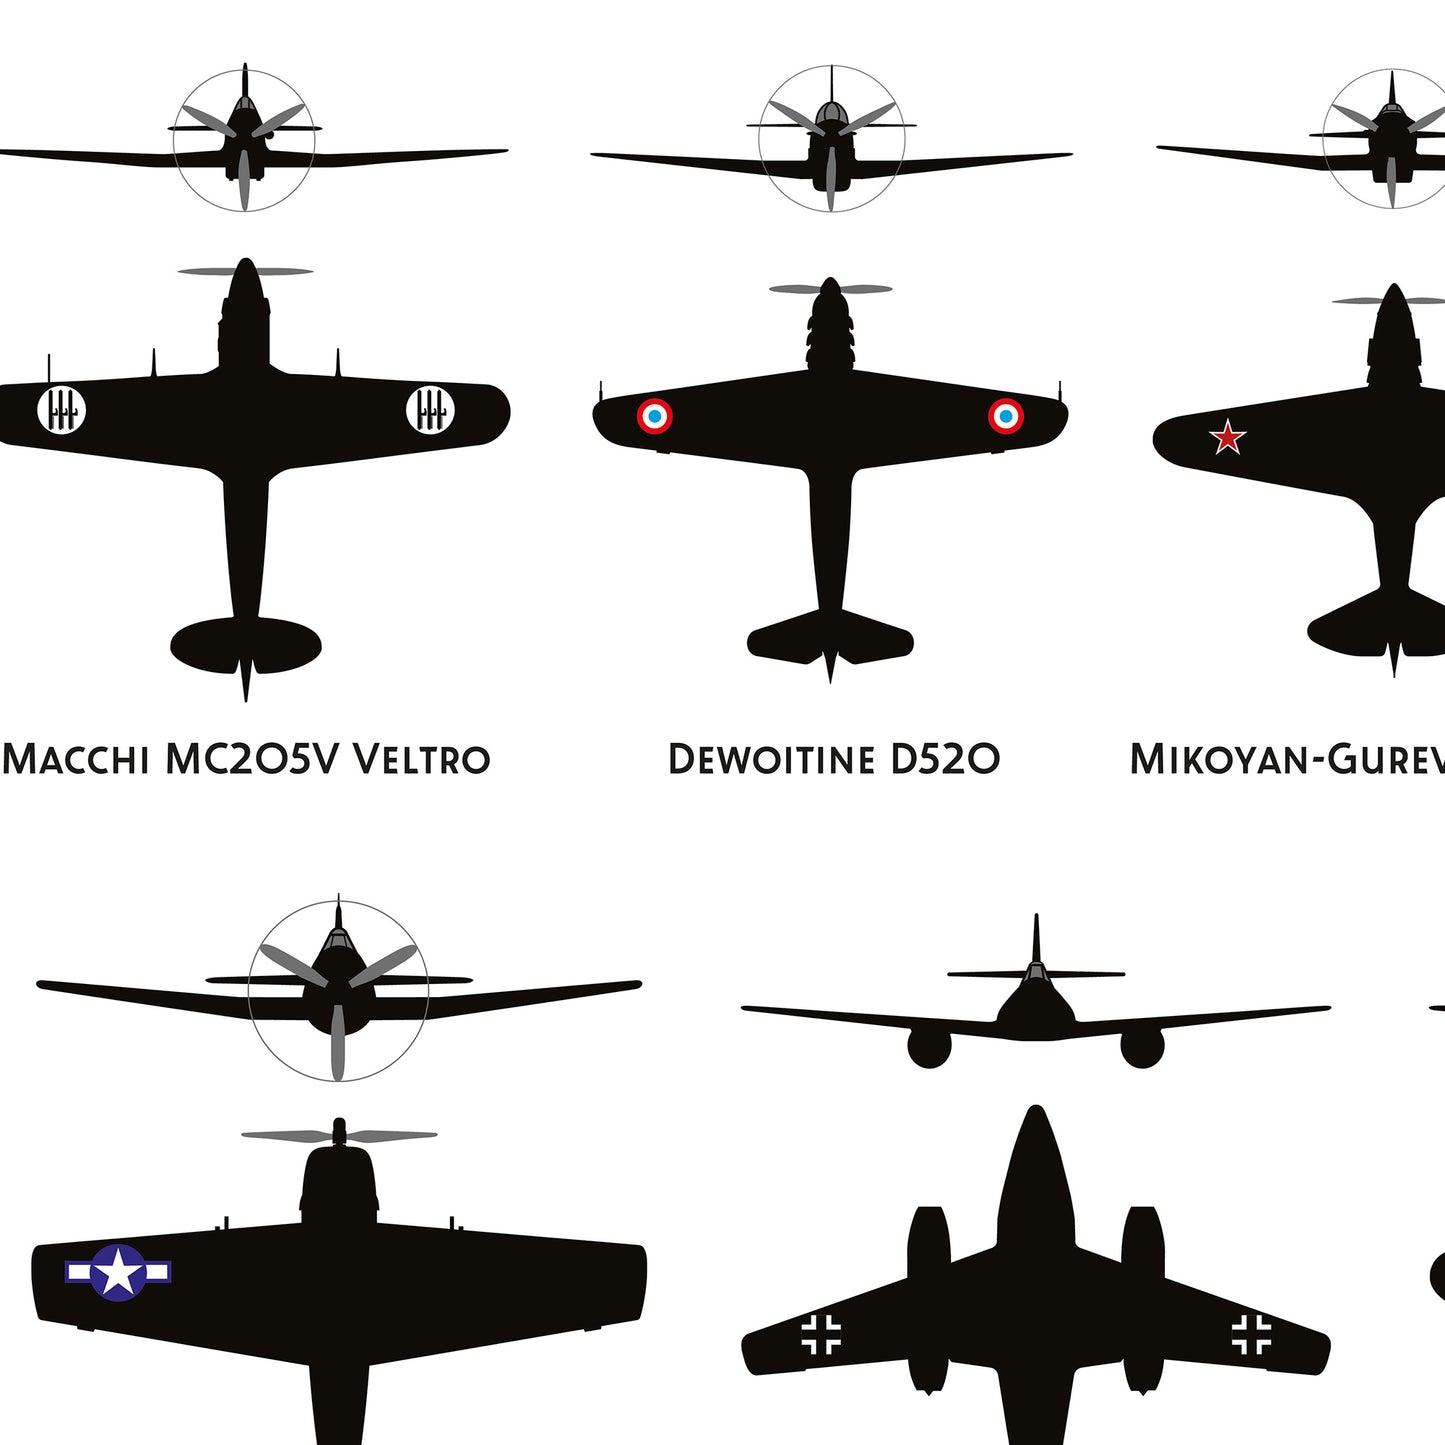 World War 2 Fighter Aircraft Spotter's Guide Poster